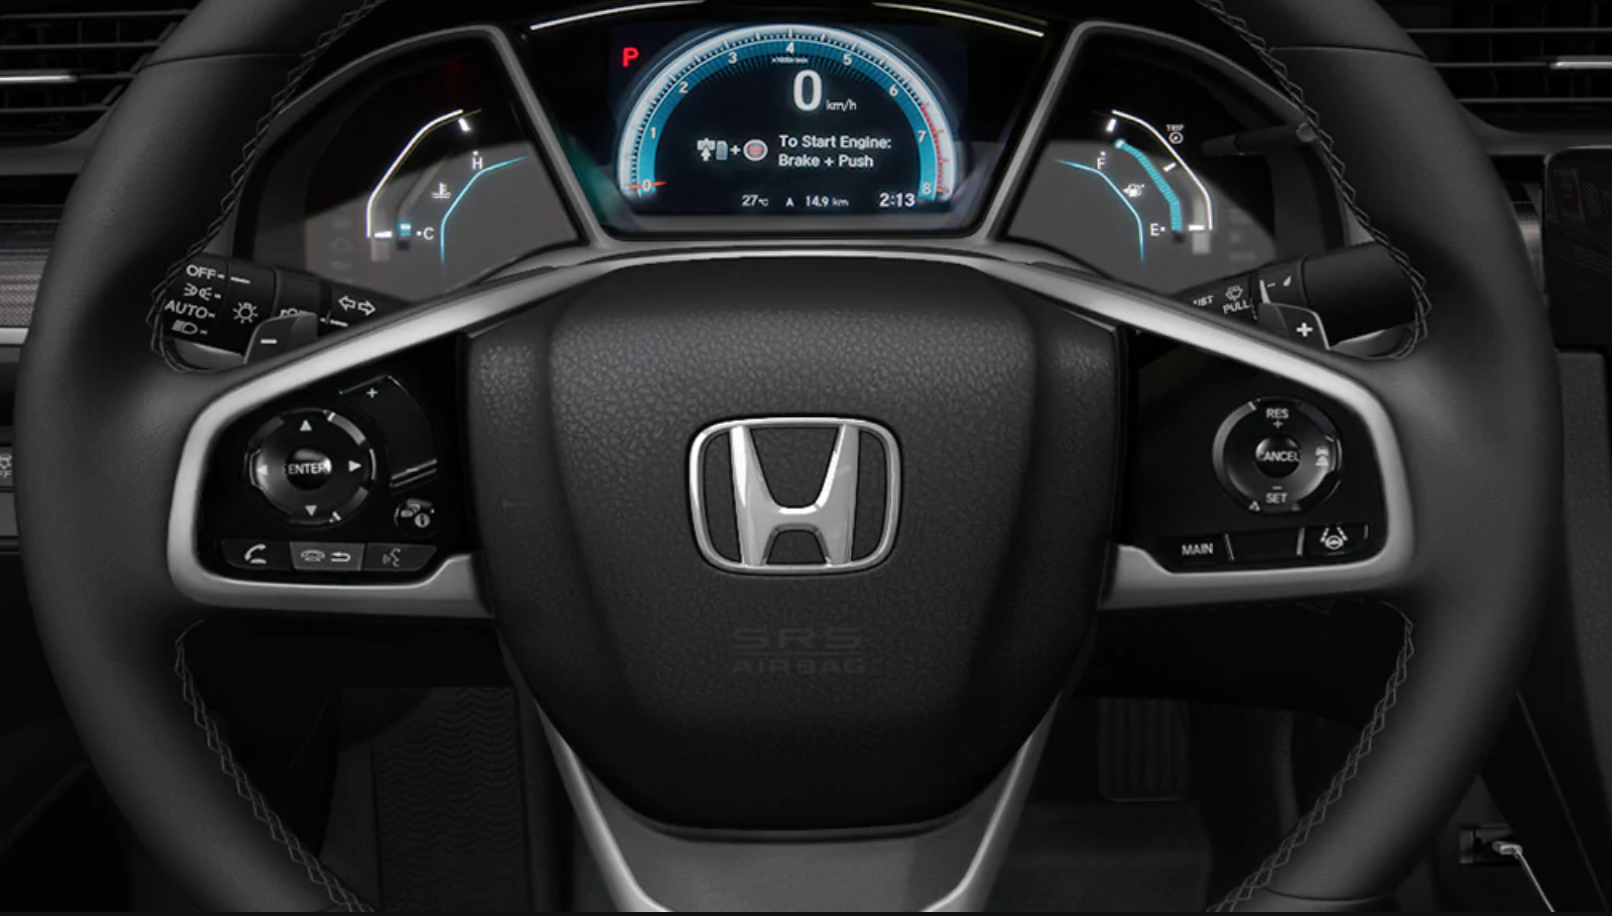 How to Reset Honda Civic Maintenance Minder